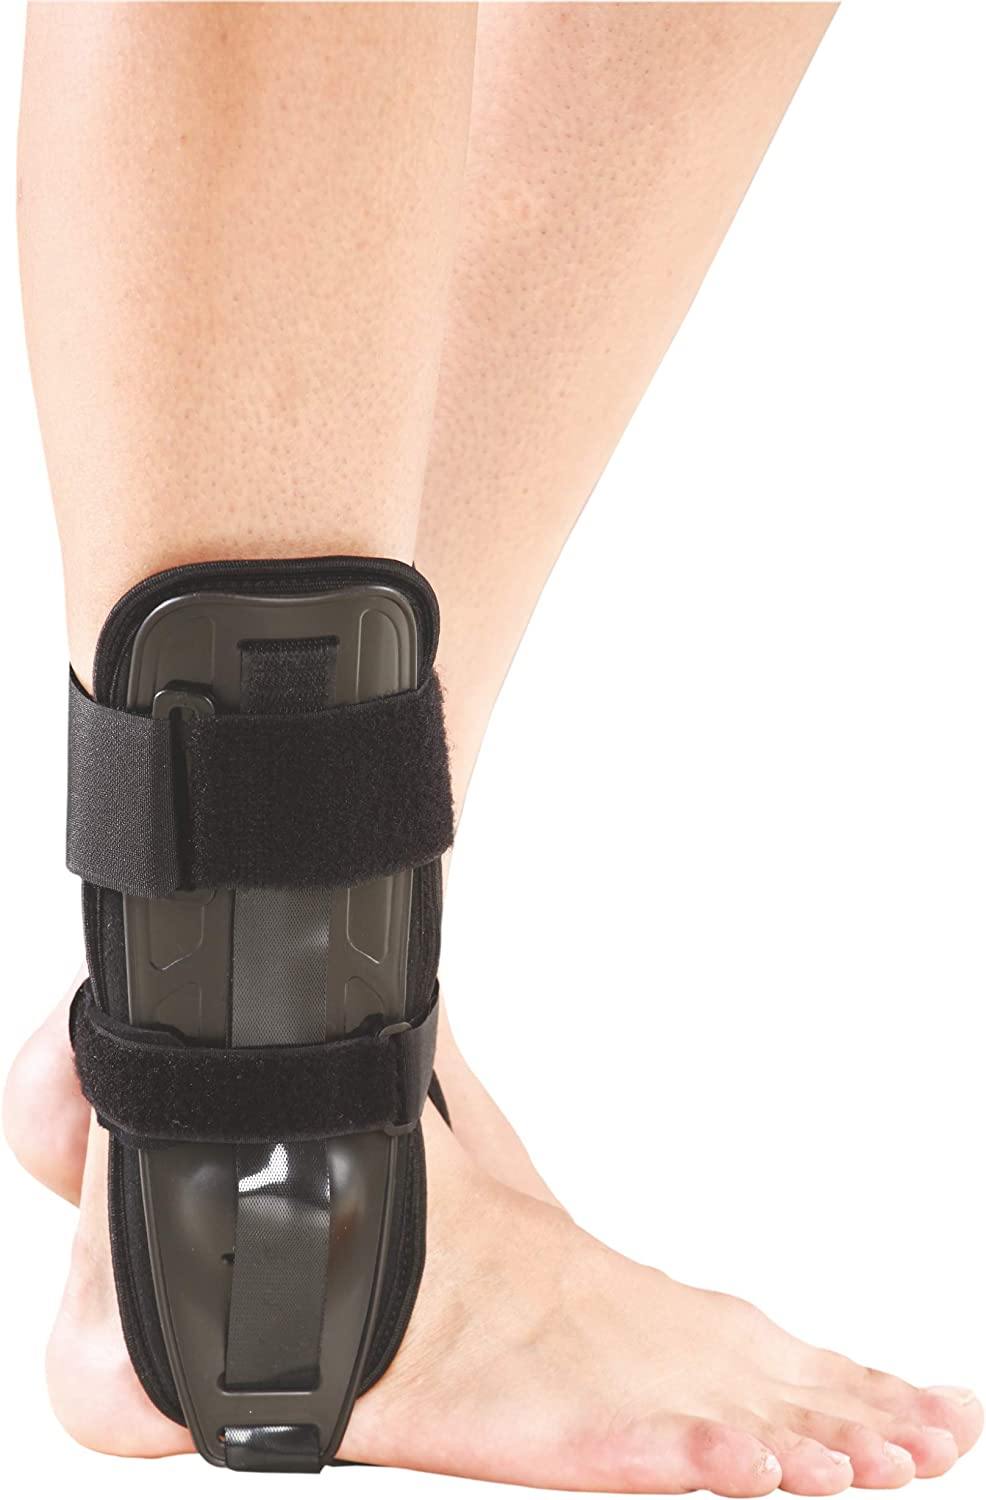 Tynor Ankle Splint D-26-Health & personal care-dealsplant